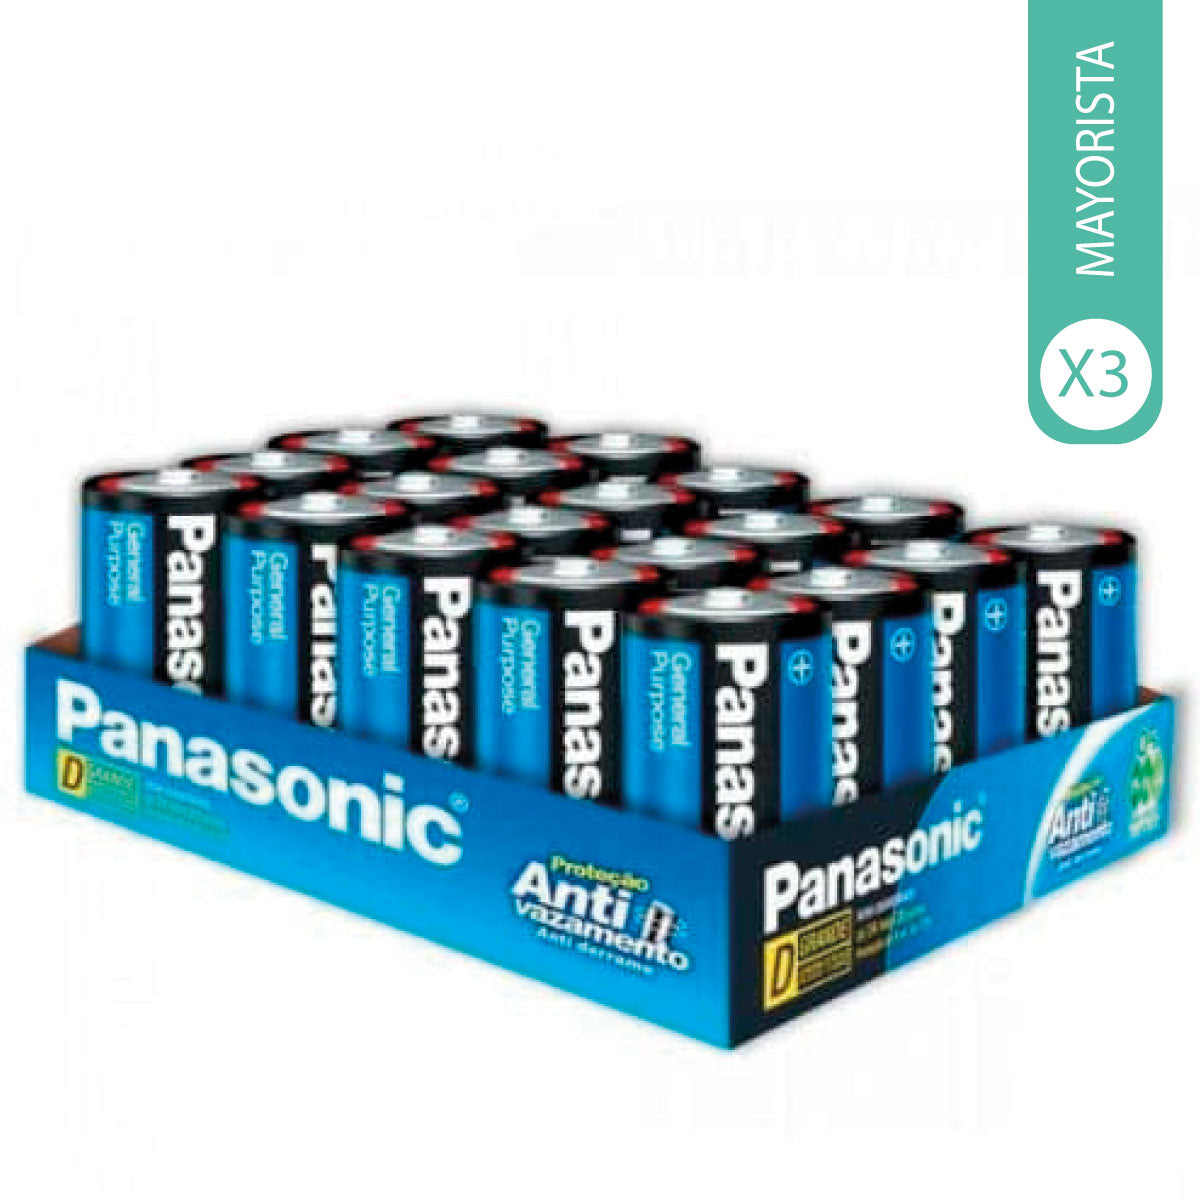 Pack de 3 display de 24 pilas zinc manganeso d 1,5v ultra hyper panasonic [Openbox]